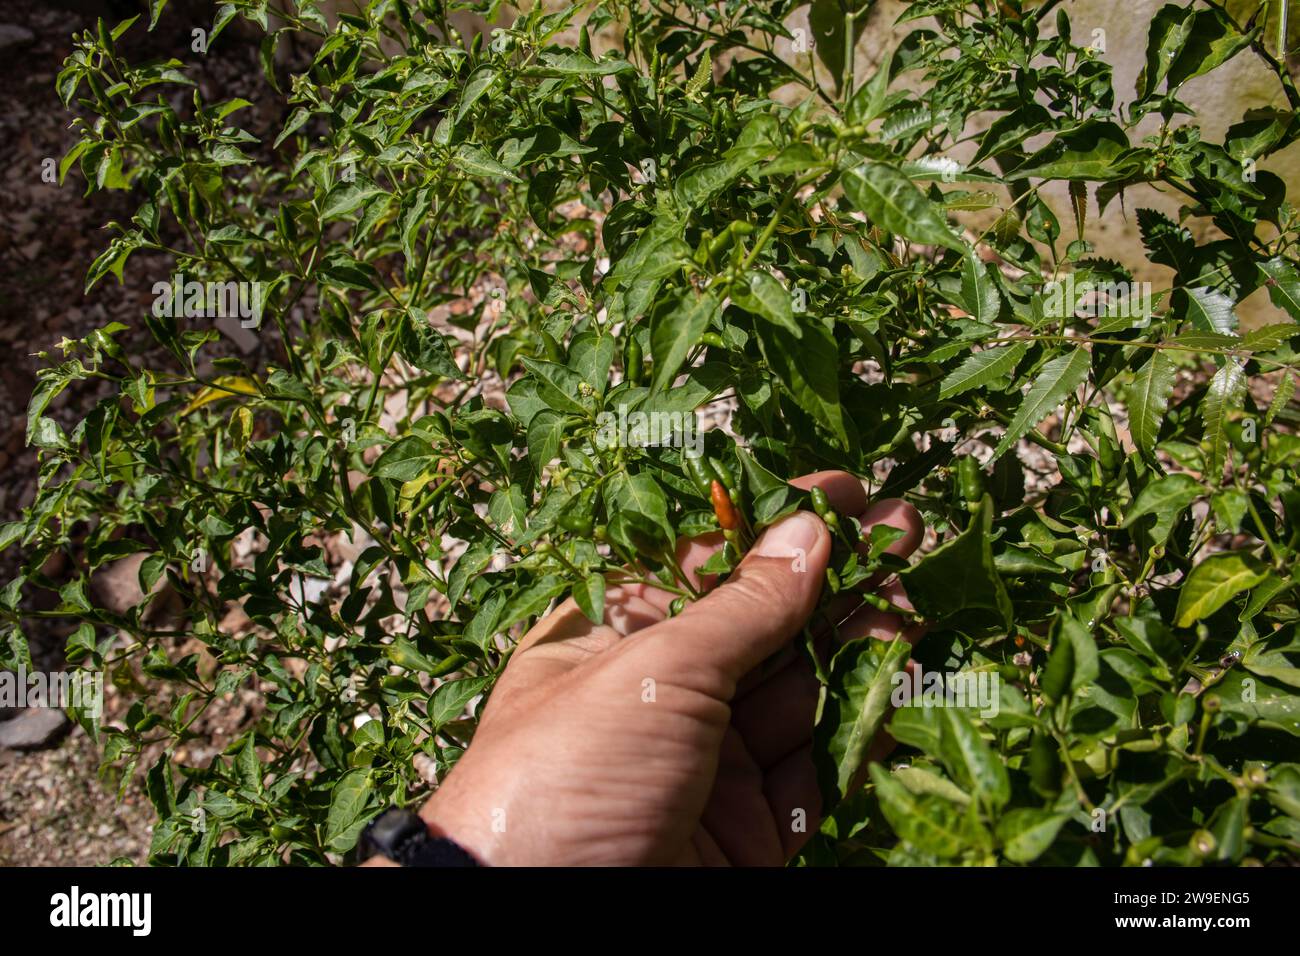 Pili Pili (also known as piri-piri or peri-peri) spicy hot papers, cultivar of Capsicum frutescens from the malagueta pepper, at organic farm Stock Photo